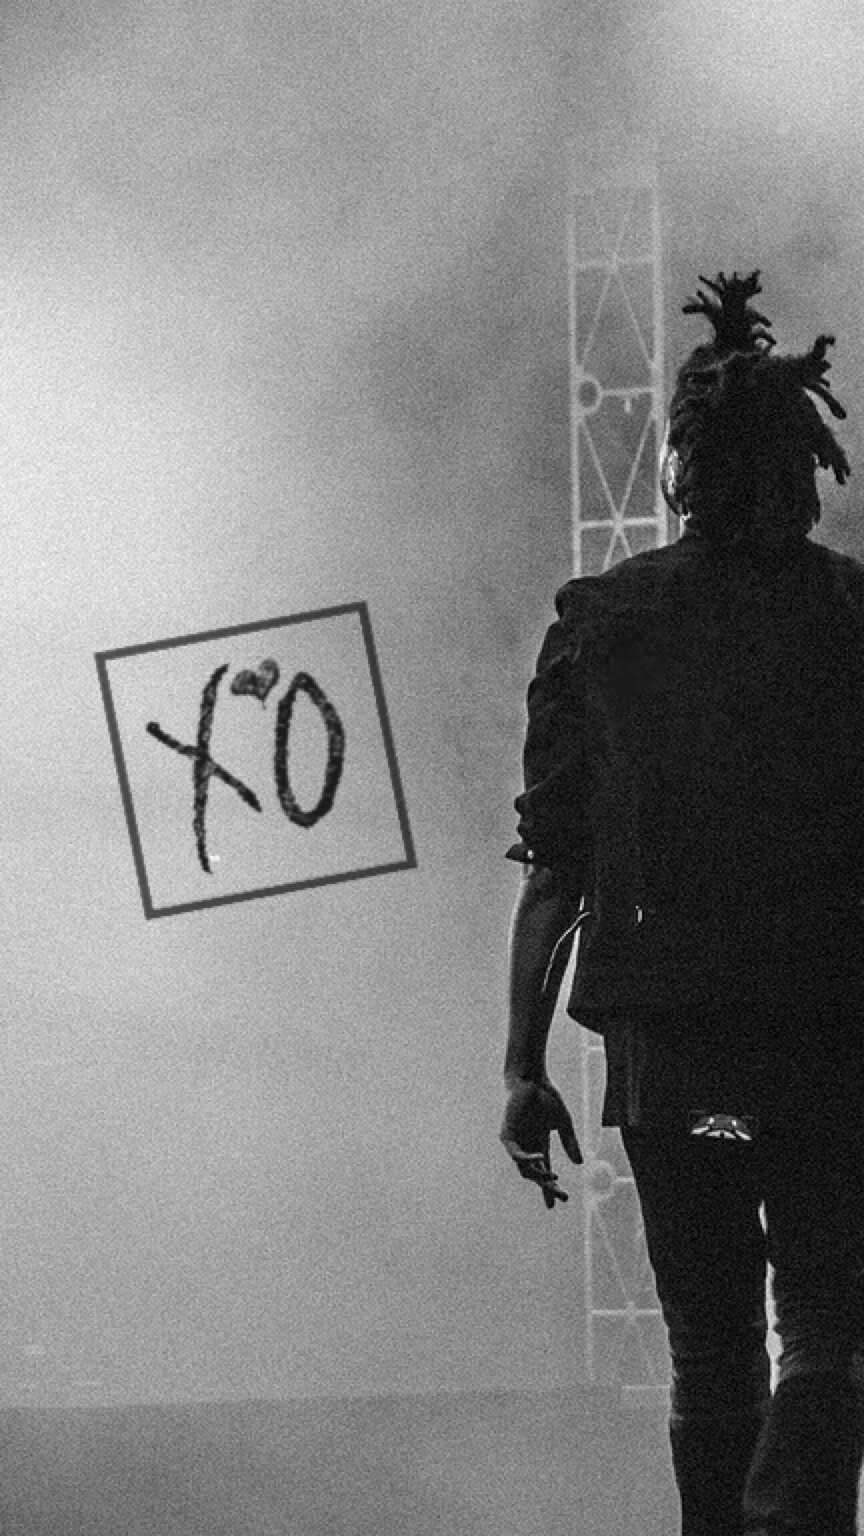 The Weeknd Xo Logo Wallpaper - vrogue.co